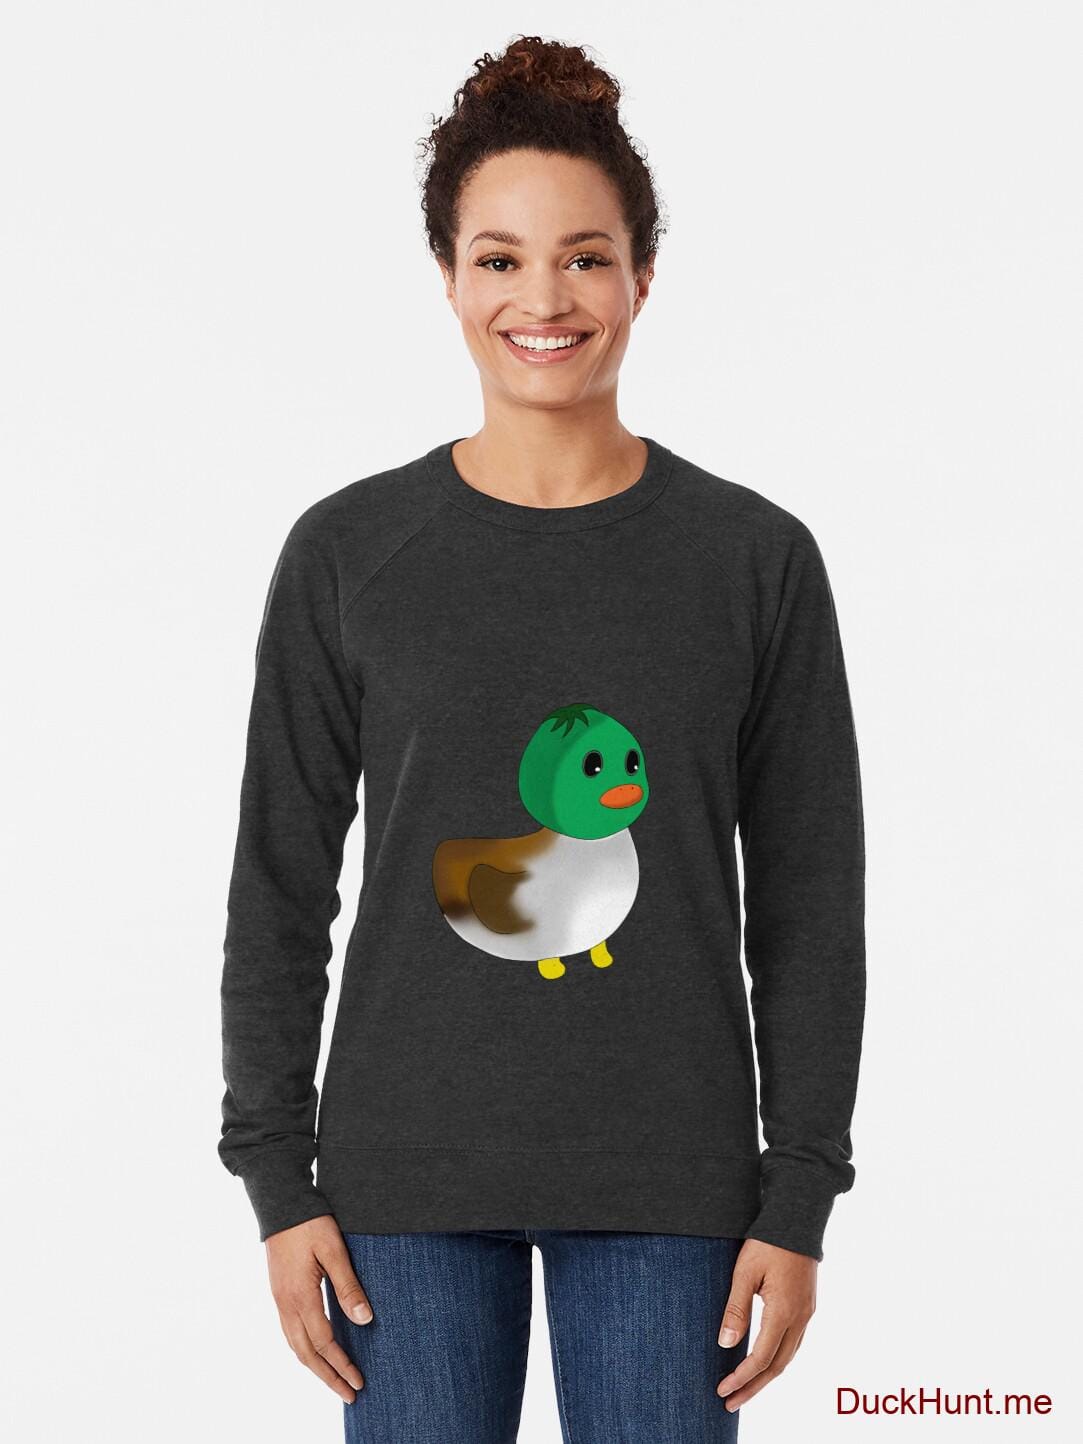 Normal Duck Charcoal Lightweight Sweatshirt alternative image 1